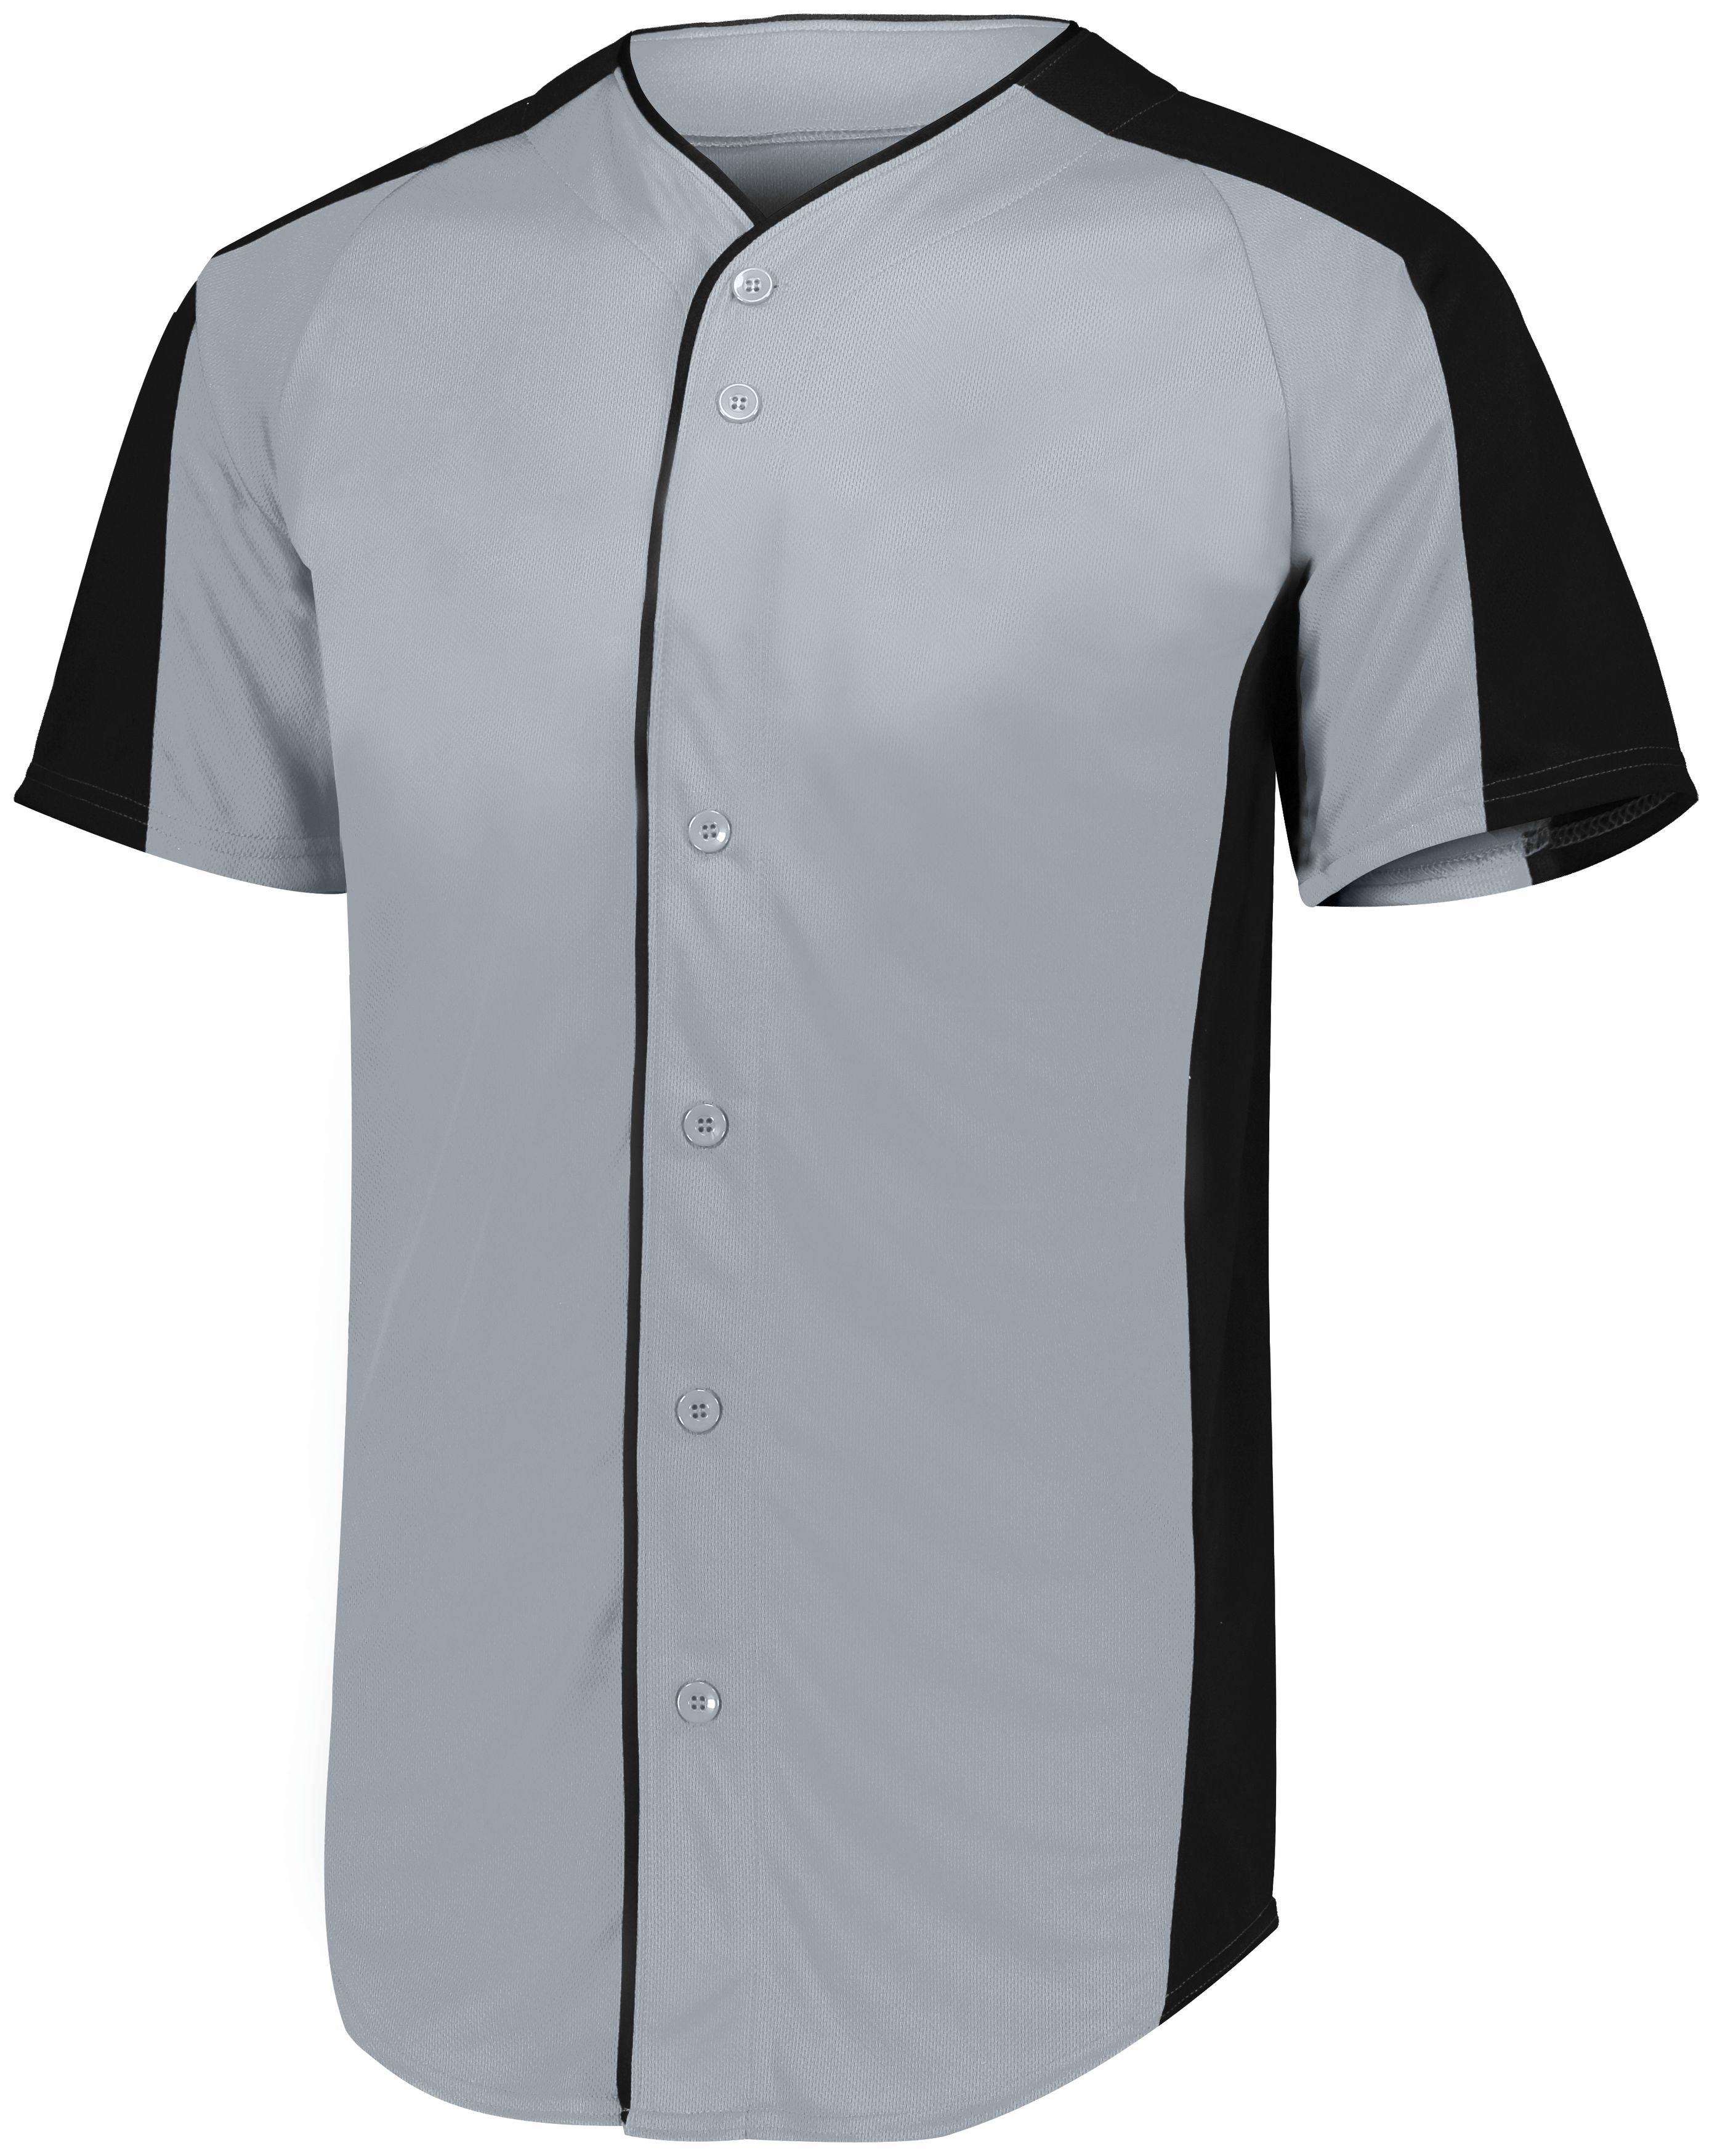 Augusta Sportswear Full-Button Baseball Jersey